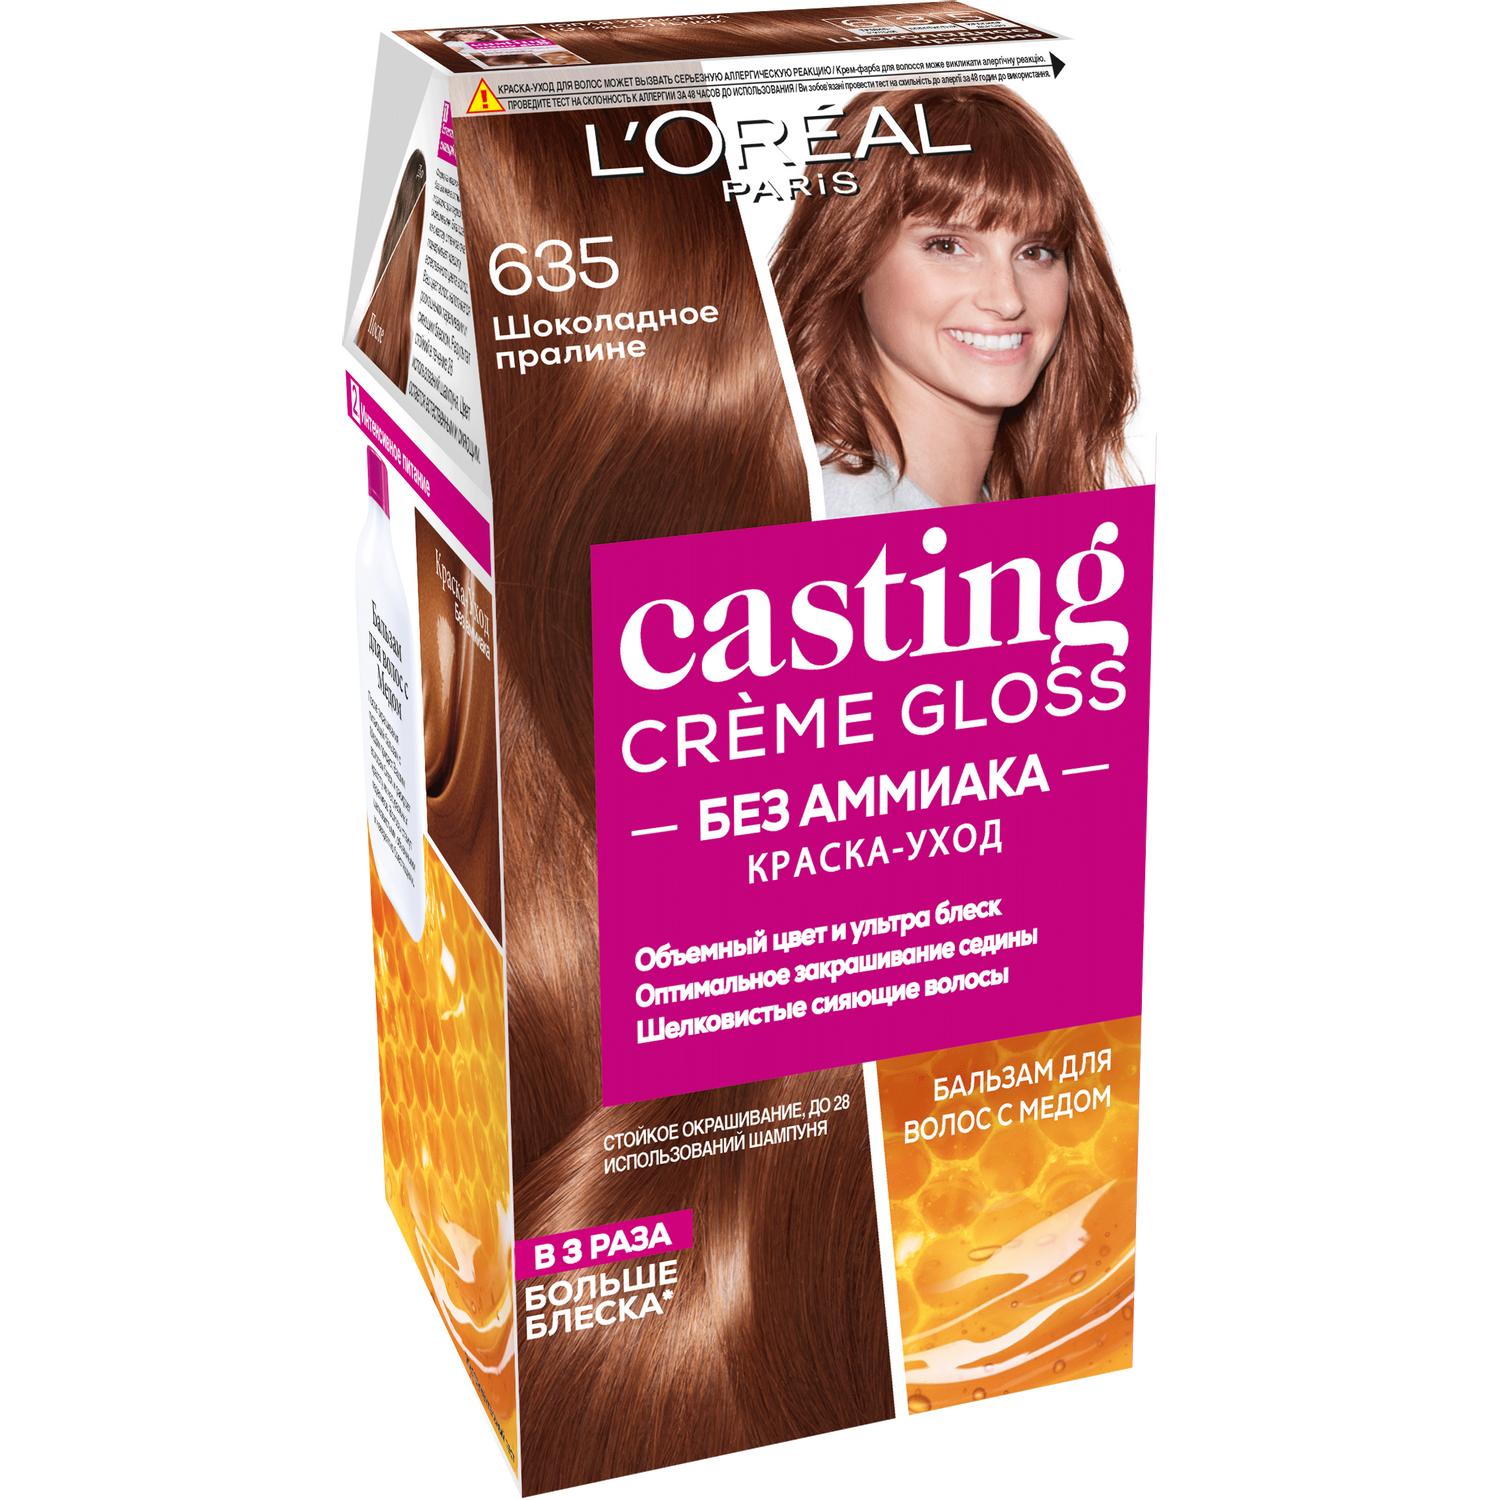 Краска для волос L'Oreal Paris Casting Creme Gloss 635 Шоколадное пралине краска для волос l’oreal excellence creme 6 темно русый